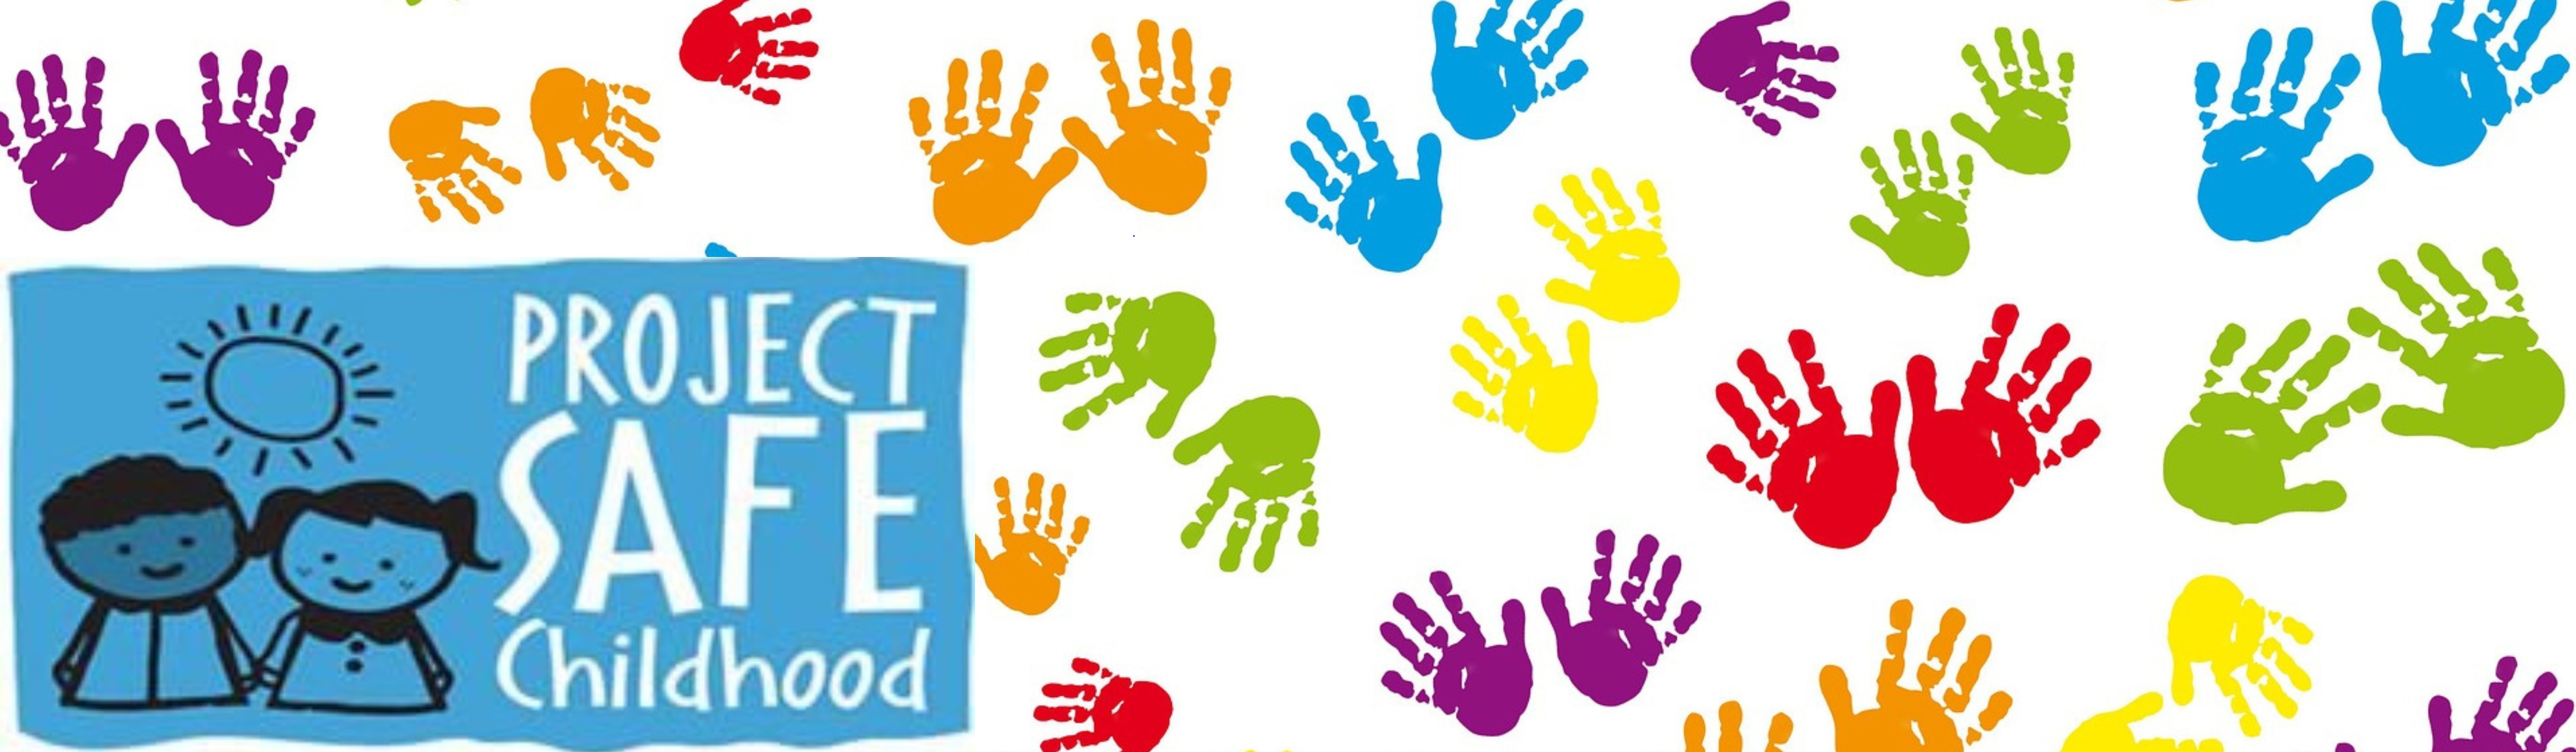 Project Safe Childhood Banner with kids' handprints